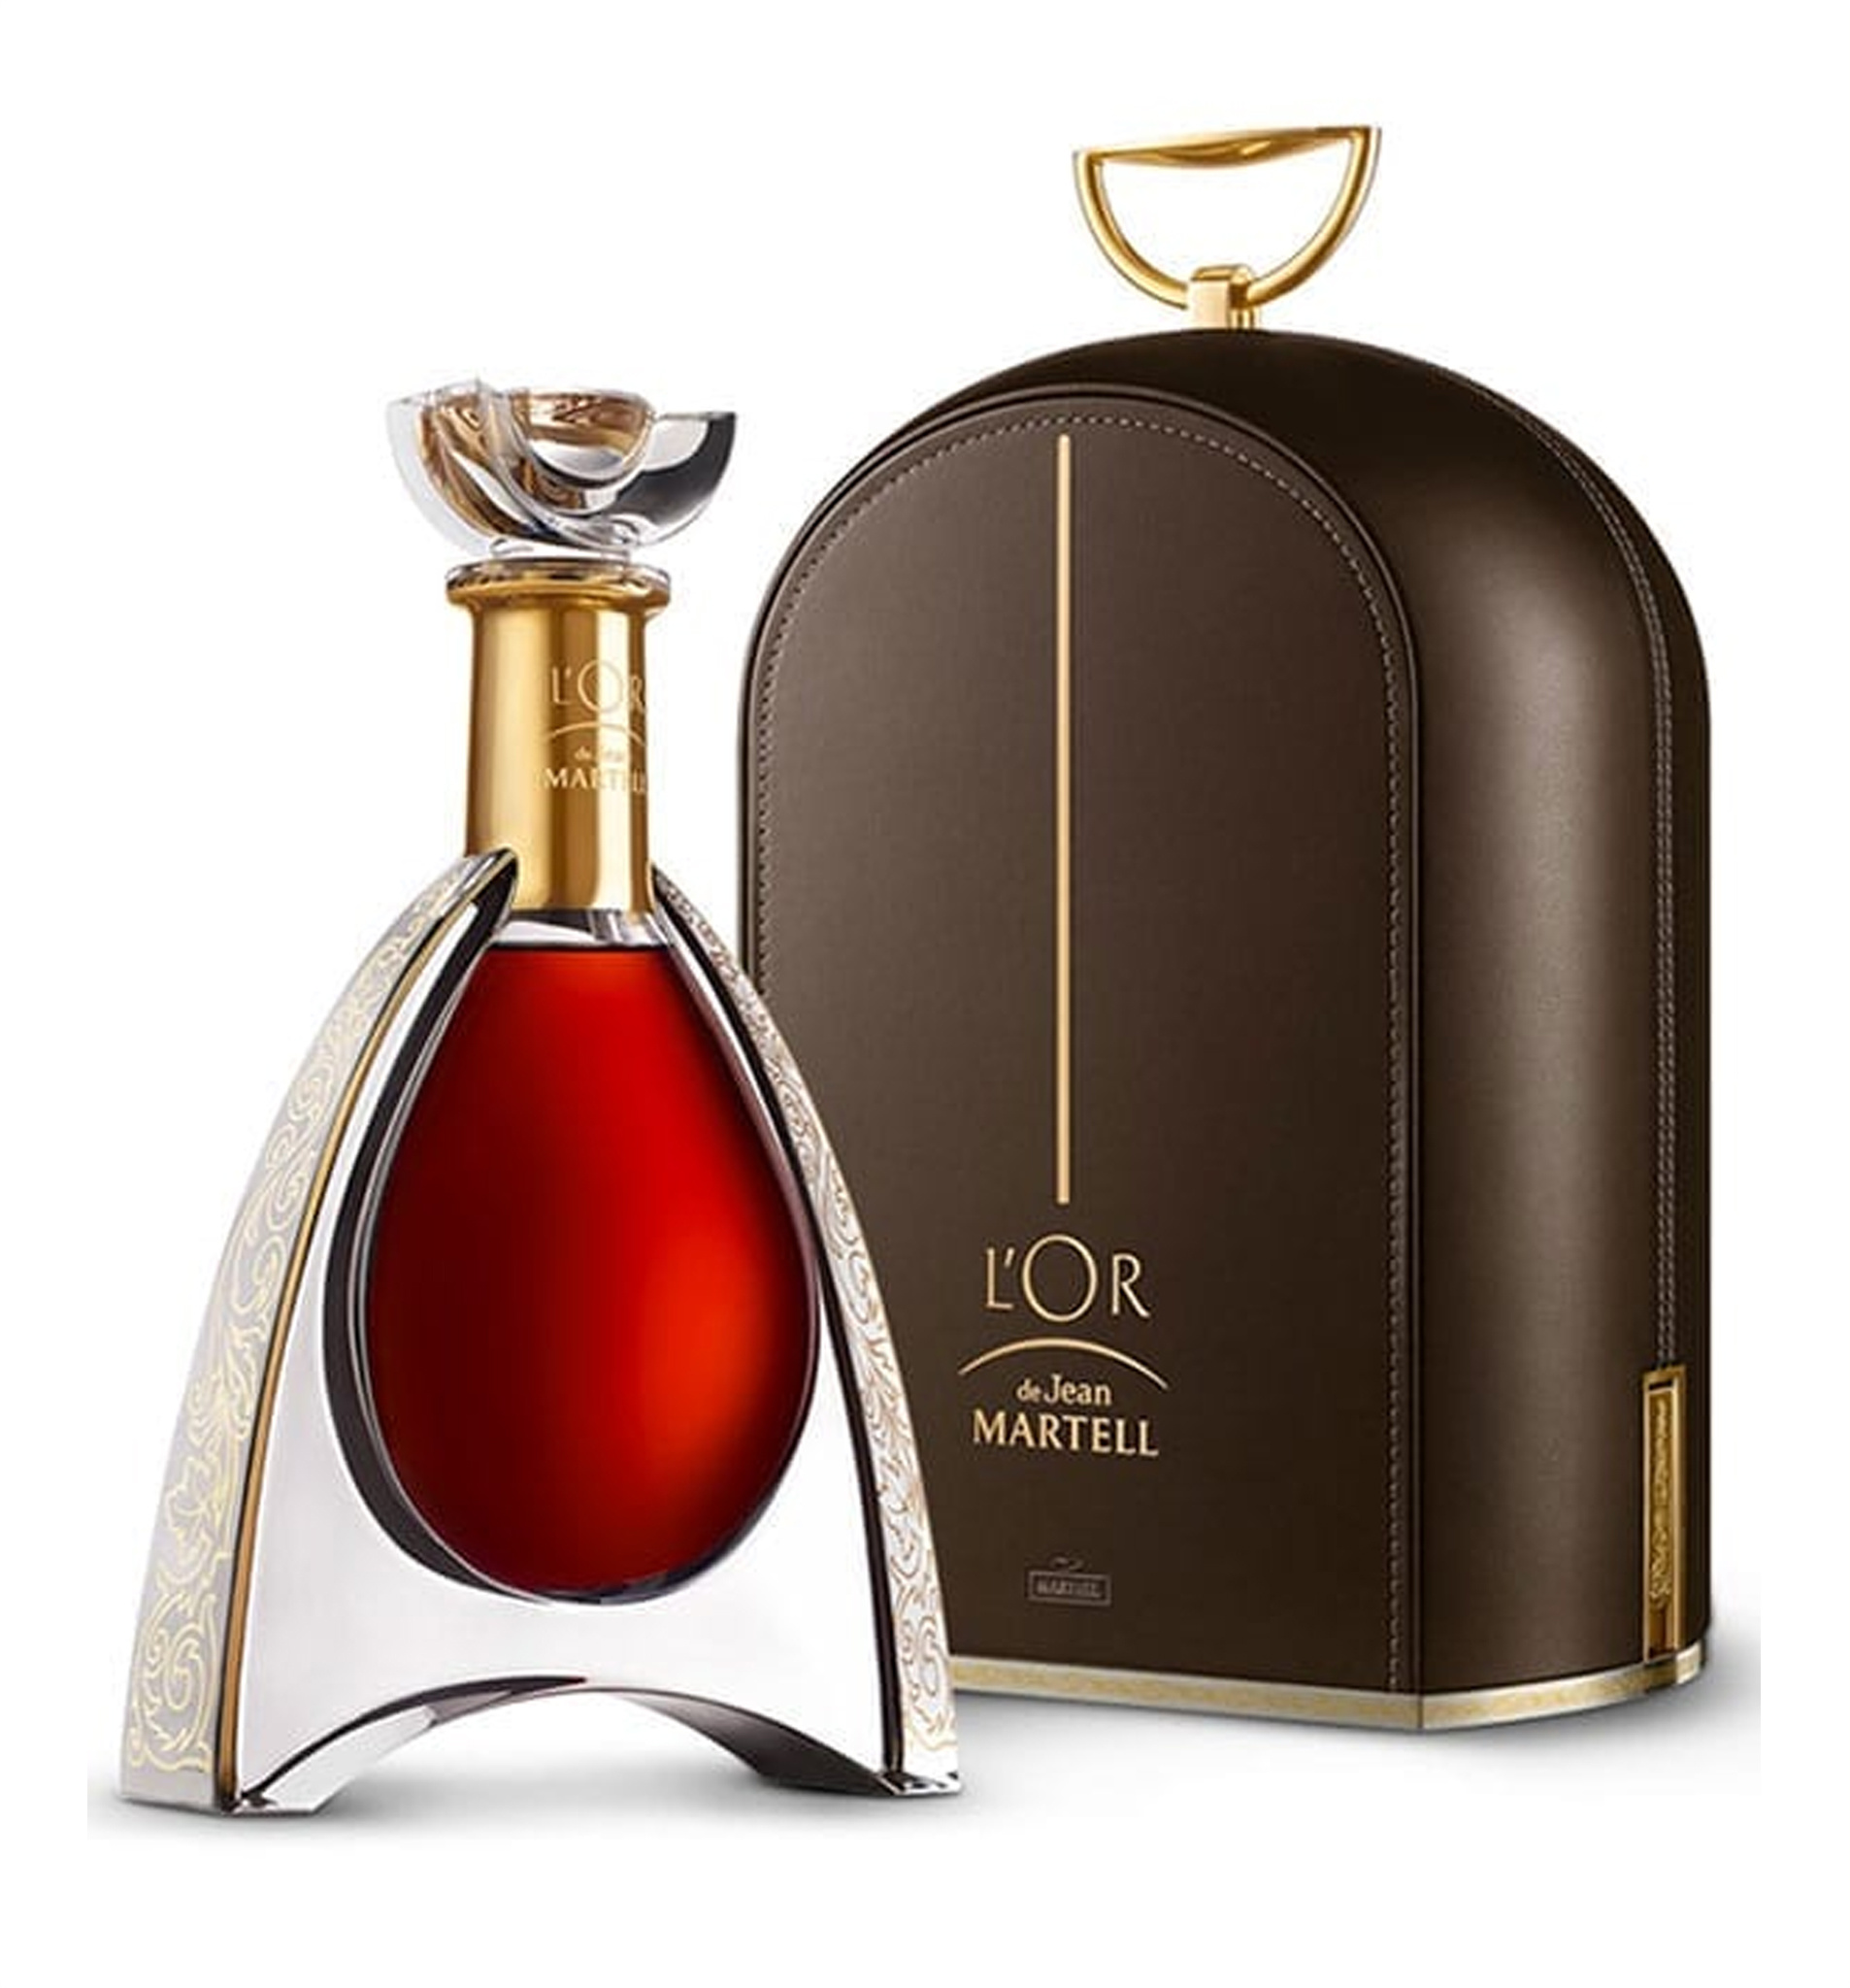 Martell Cognac L'Or de Jean Martell 750ml $4599 FREE DELIVERY 